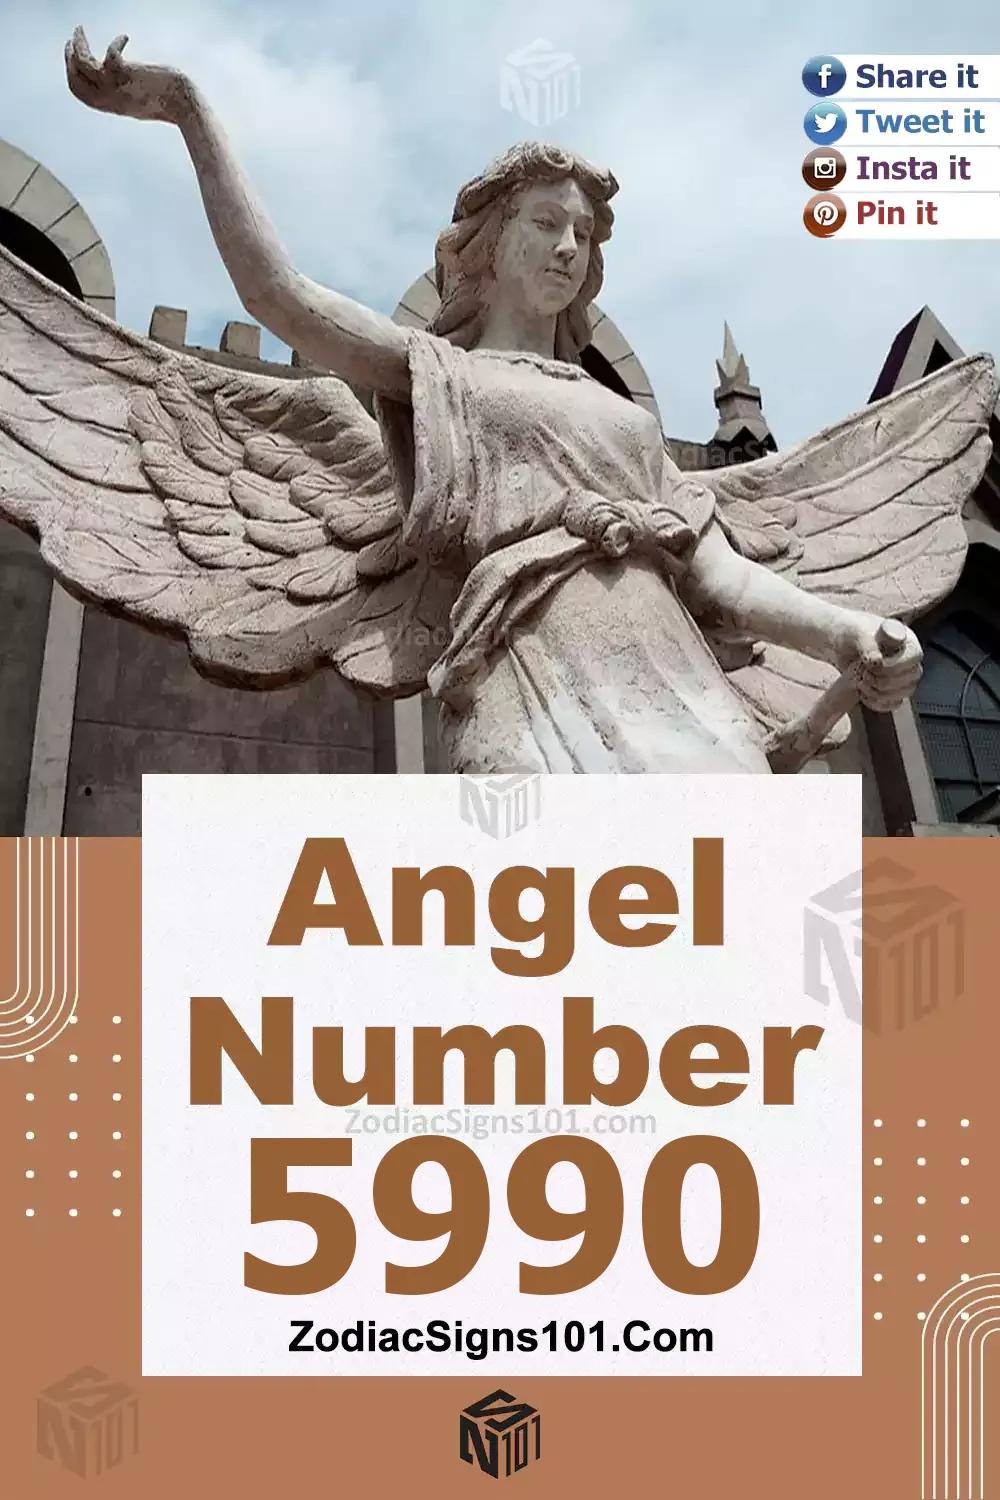 5990-Angel-Number-Meaning.jpg